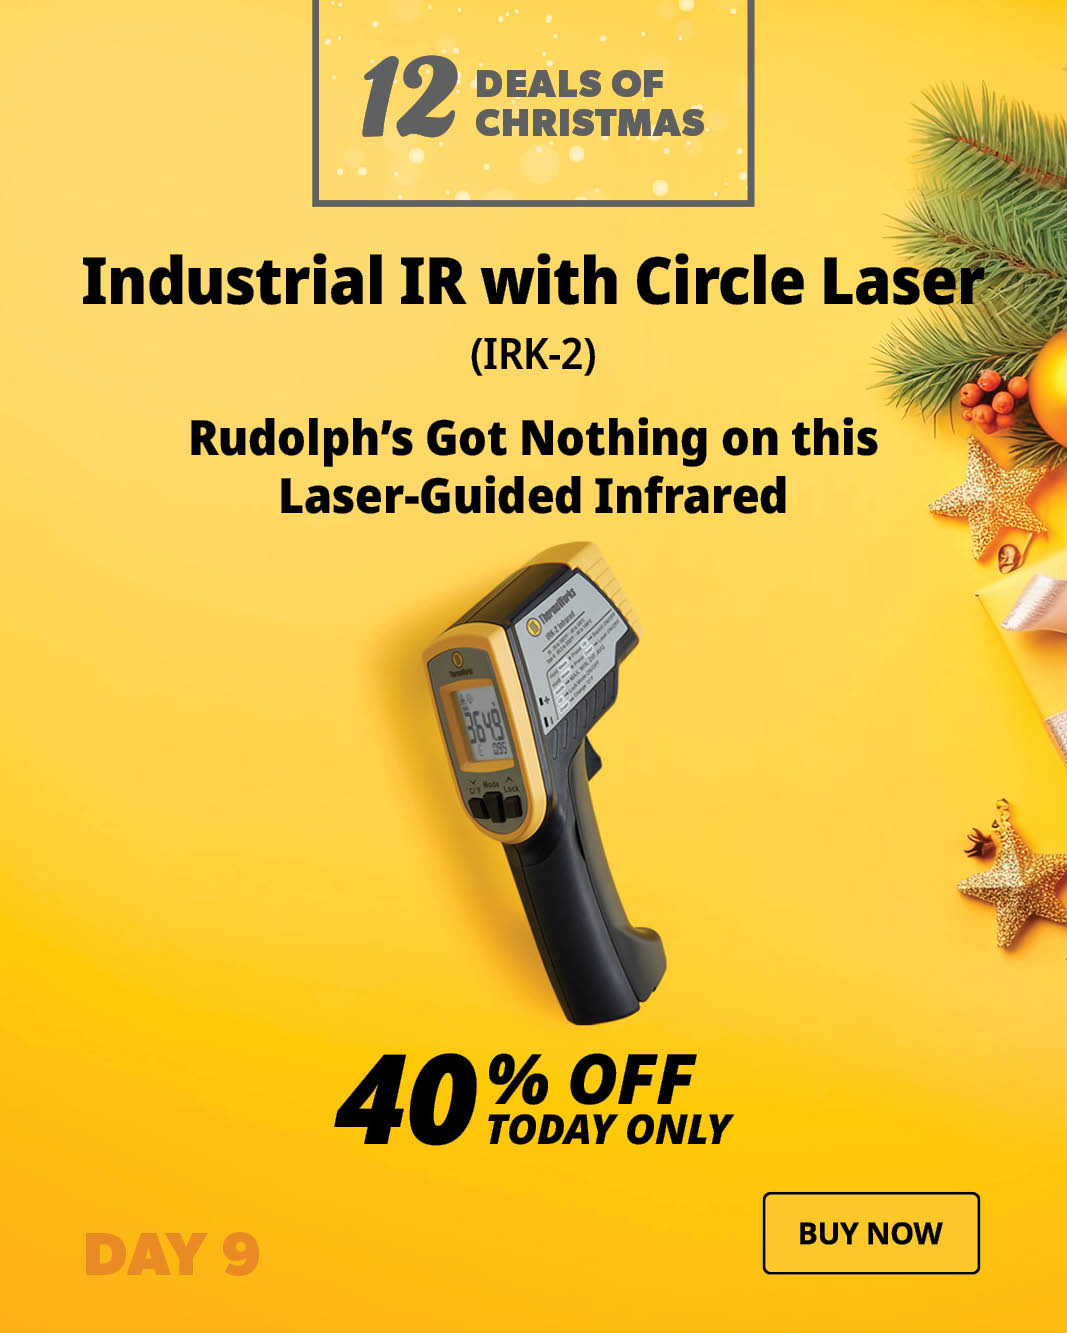 Industrial IR with Circle Laser (IRK-2)